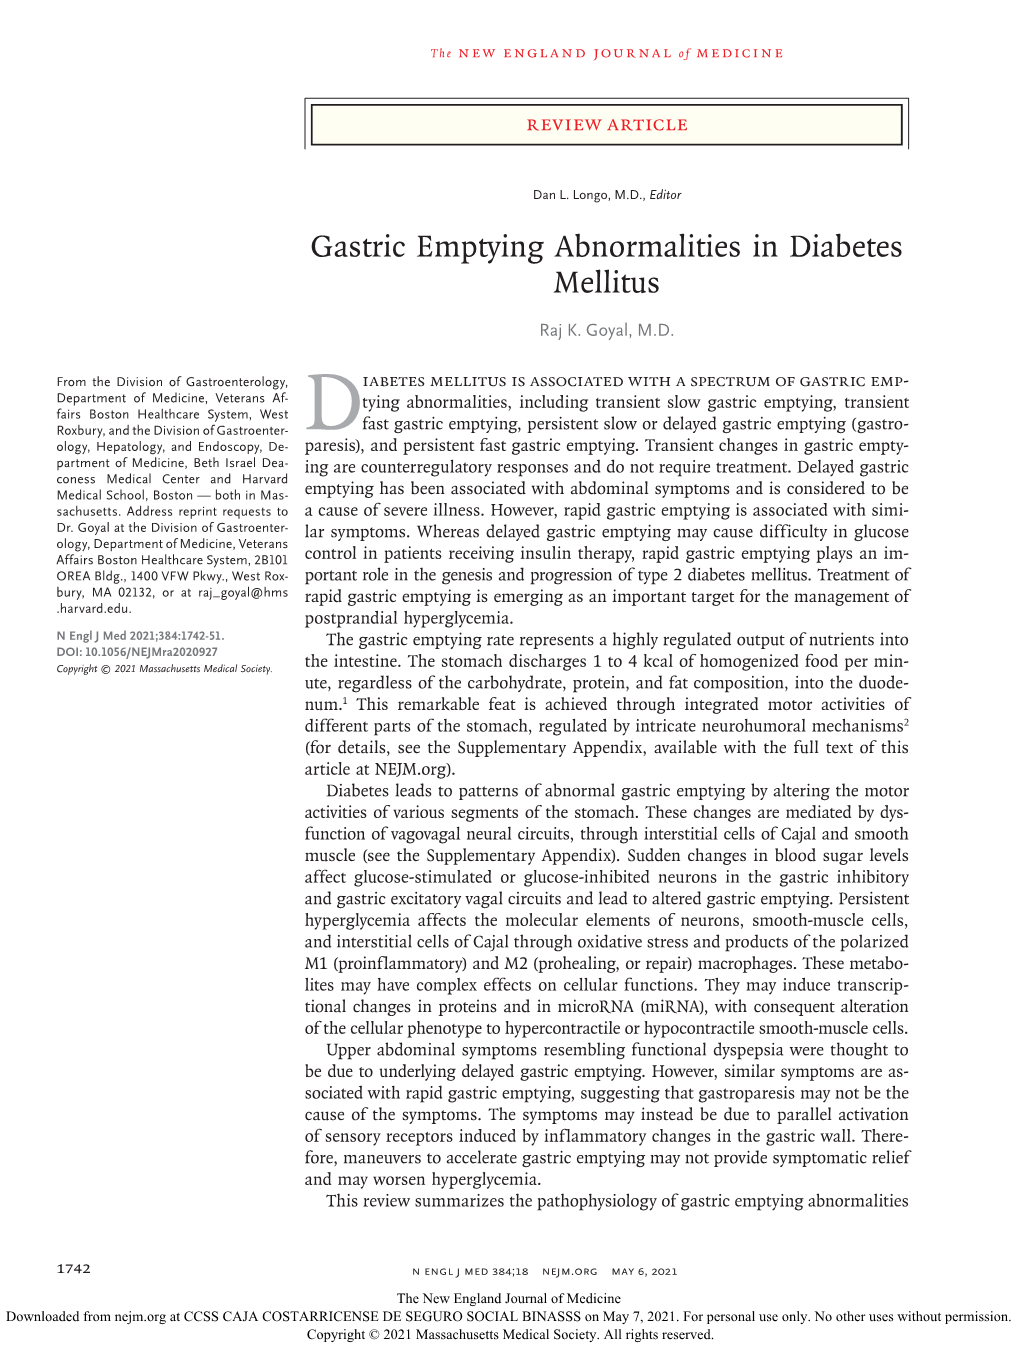 Gastric Emptying Abnormalities in Diabetes Mellitus